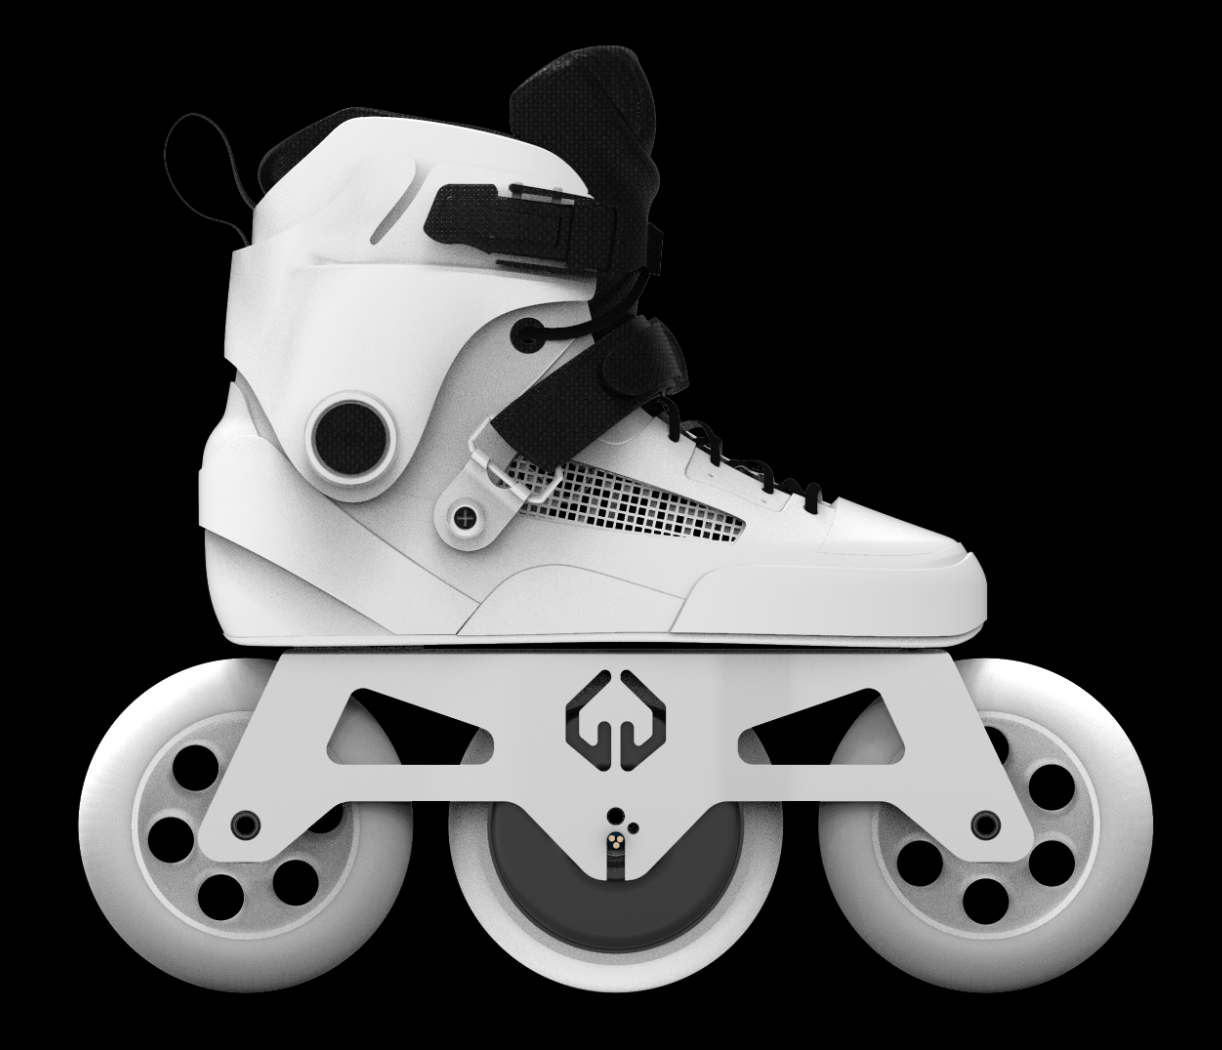 Atmos Gear Electric Skates e-skates, electric roller skates, electric skates